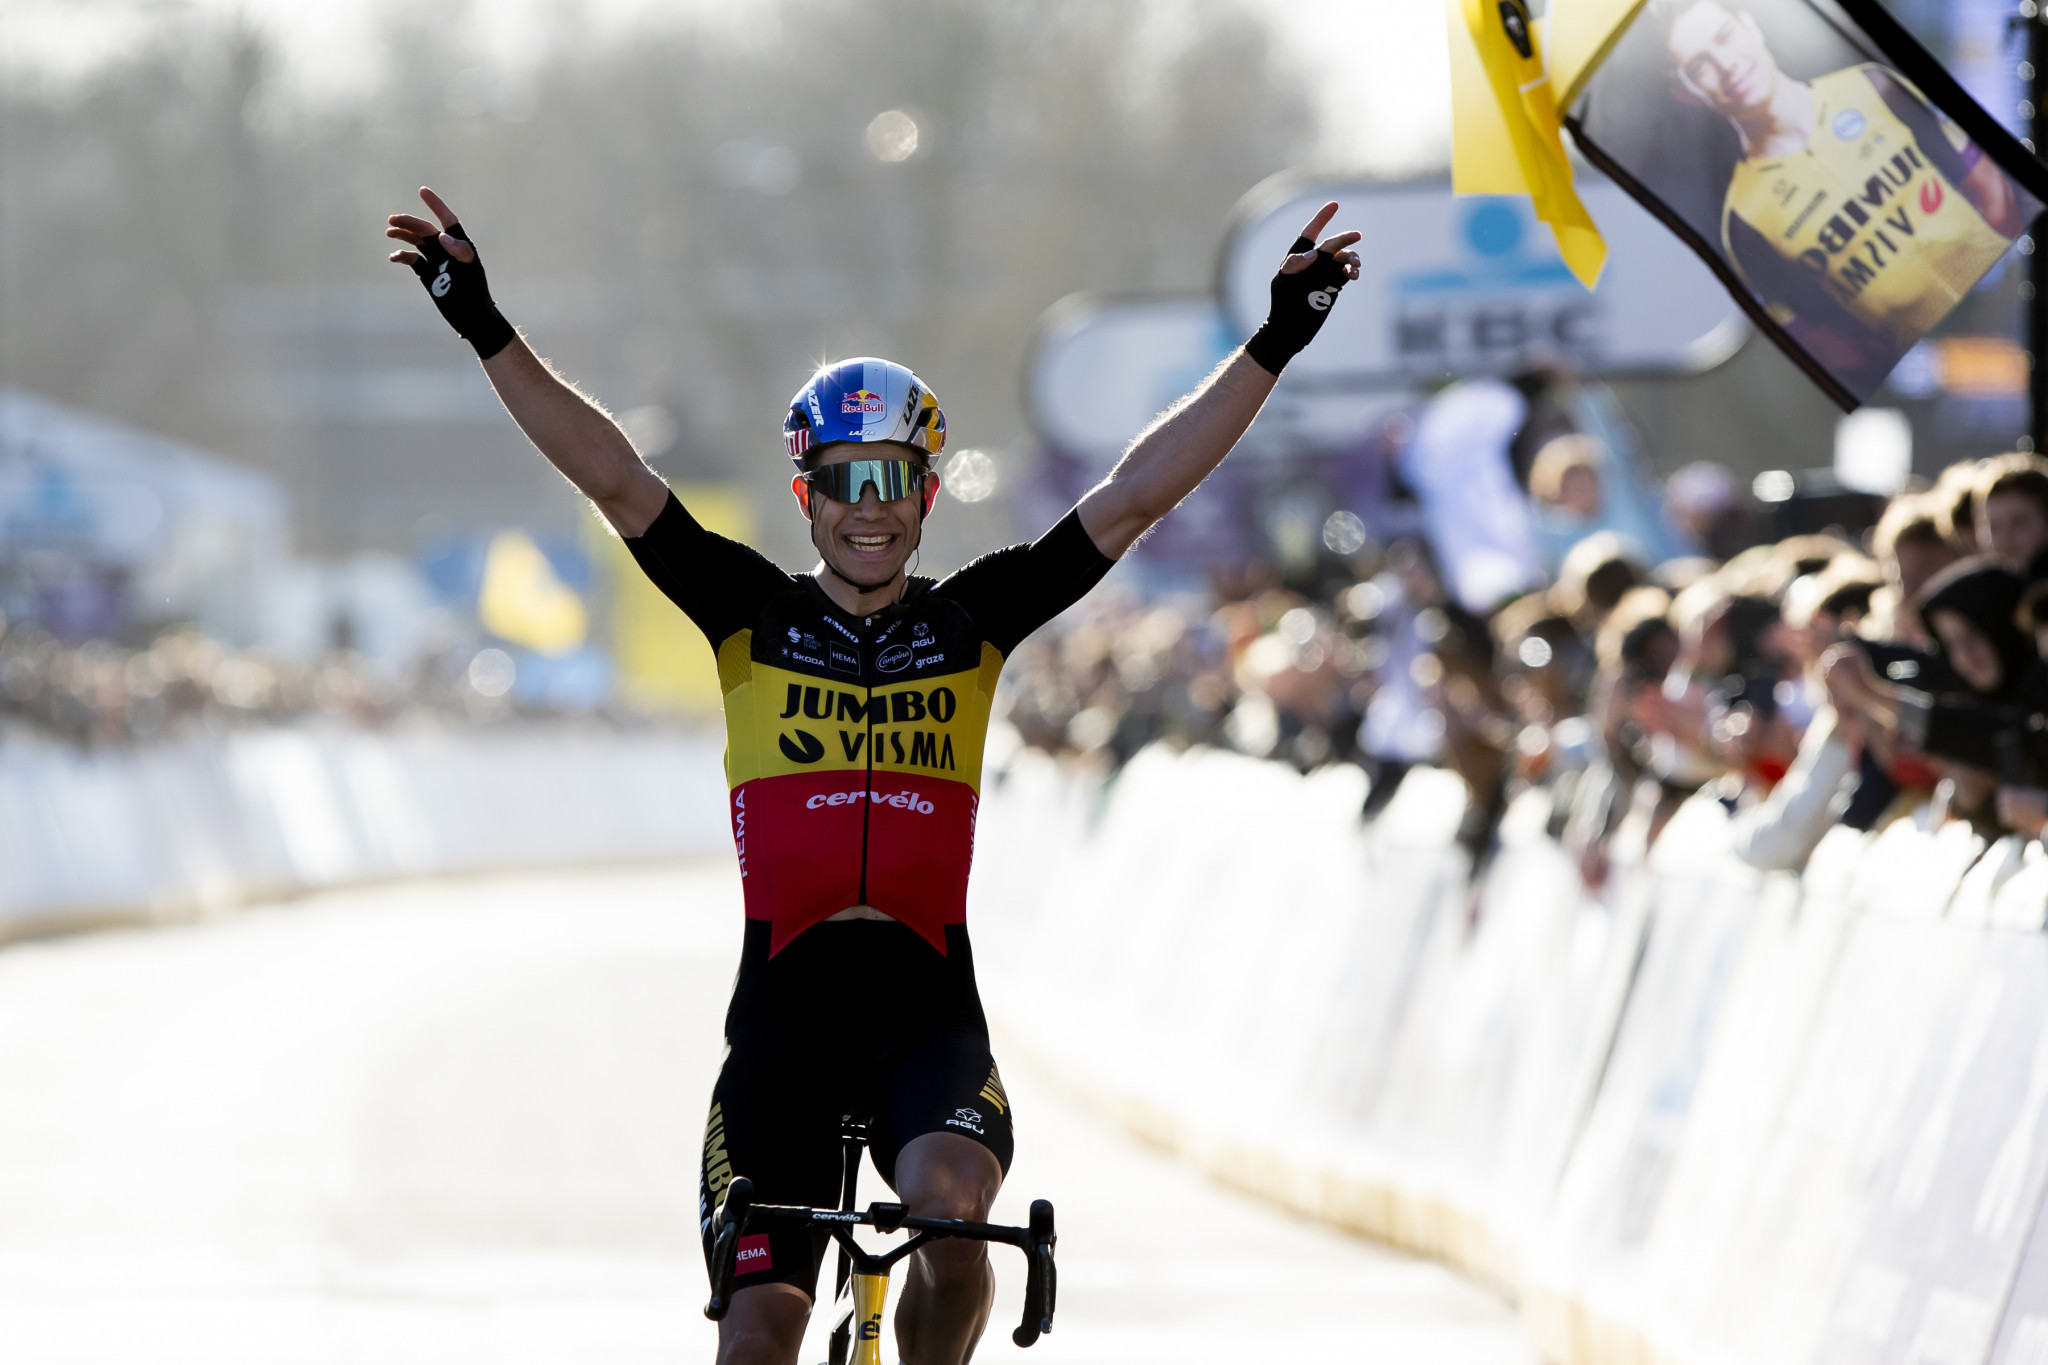 Van Aert cruises to victory at Omloop Het Nieuwsblad on UCI World Tour